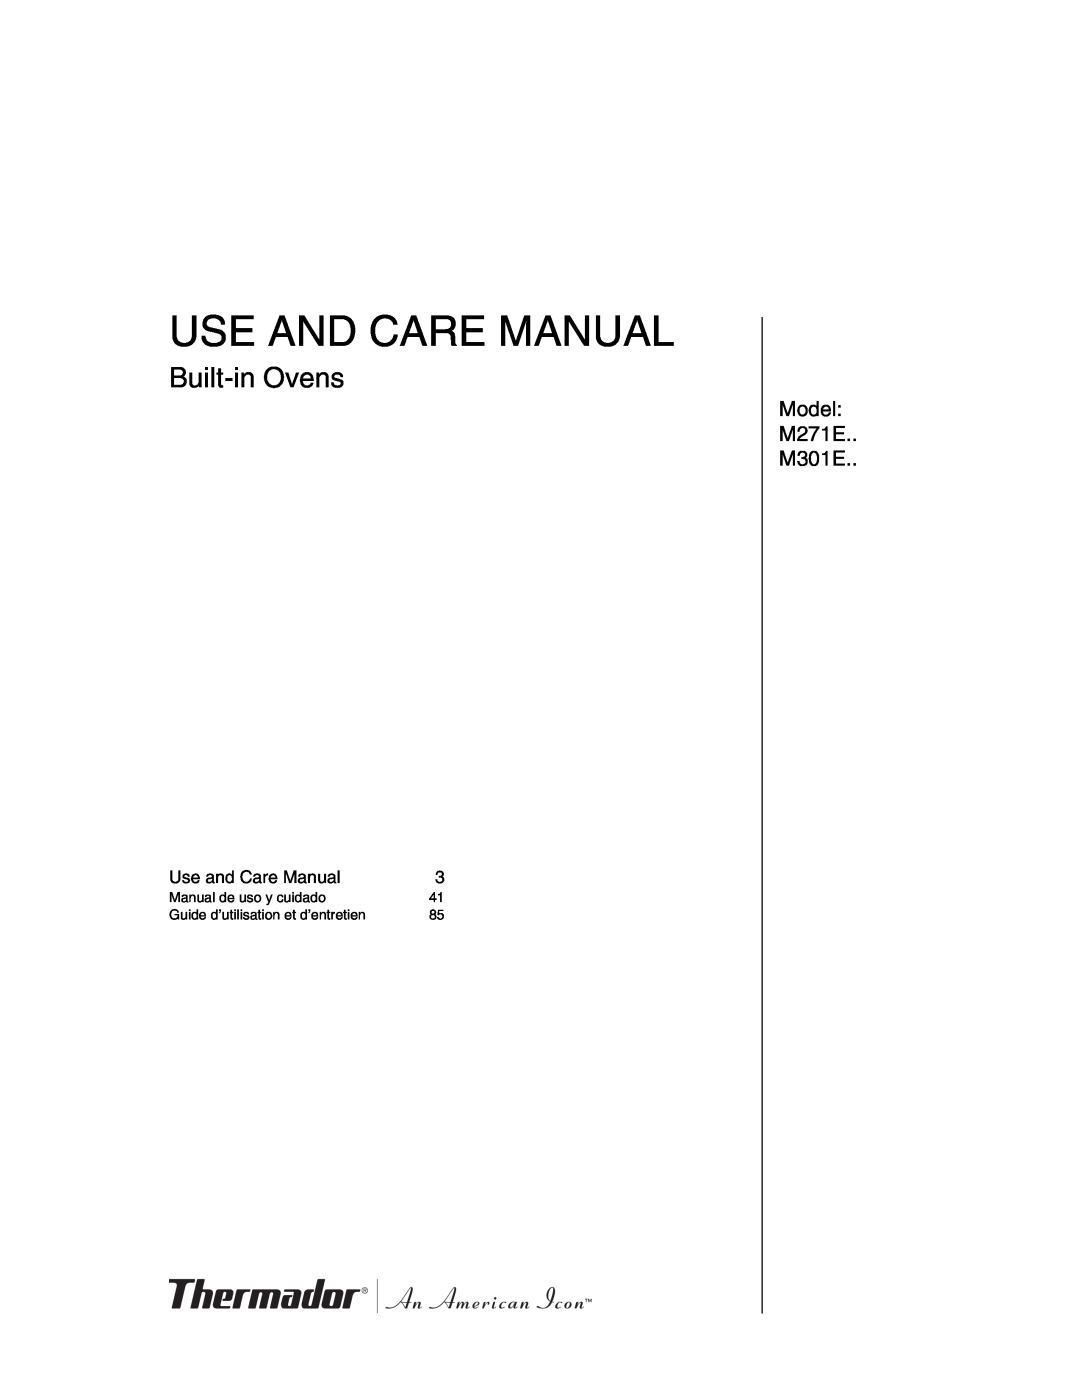 Thermador M301E, M271E manual Use And Care Manual, Built-inOvens 